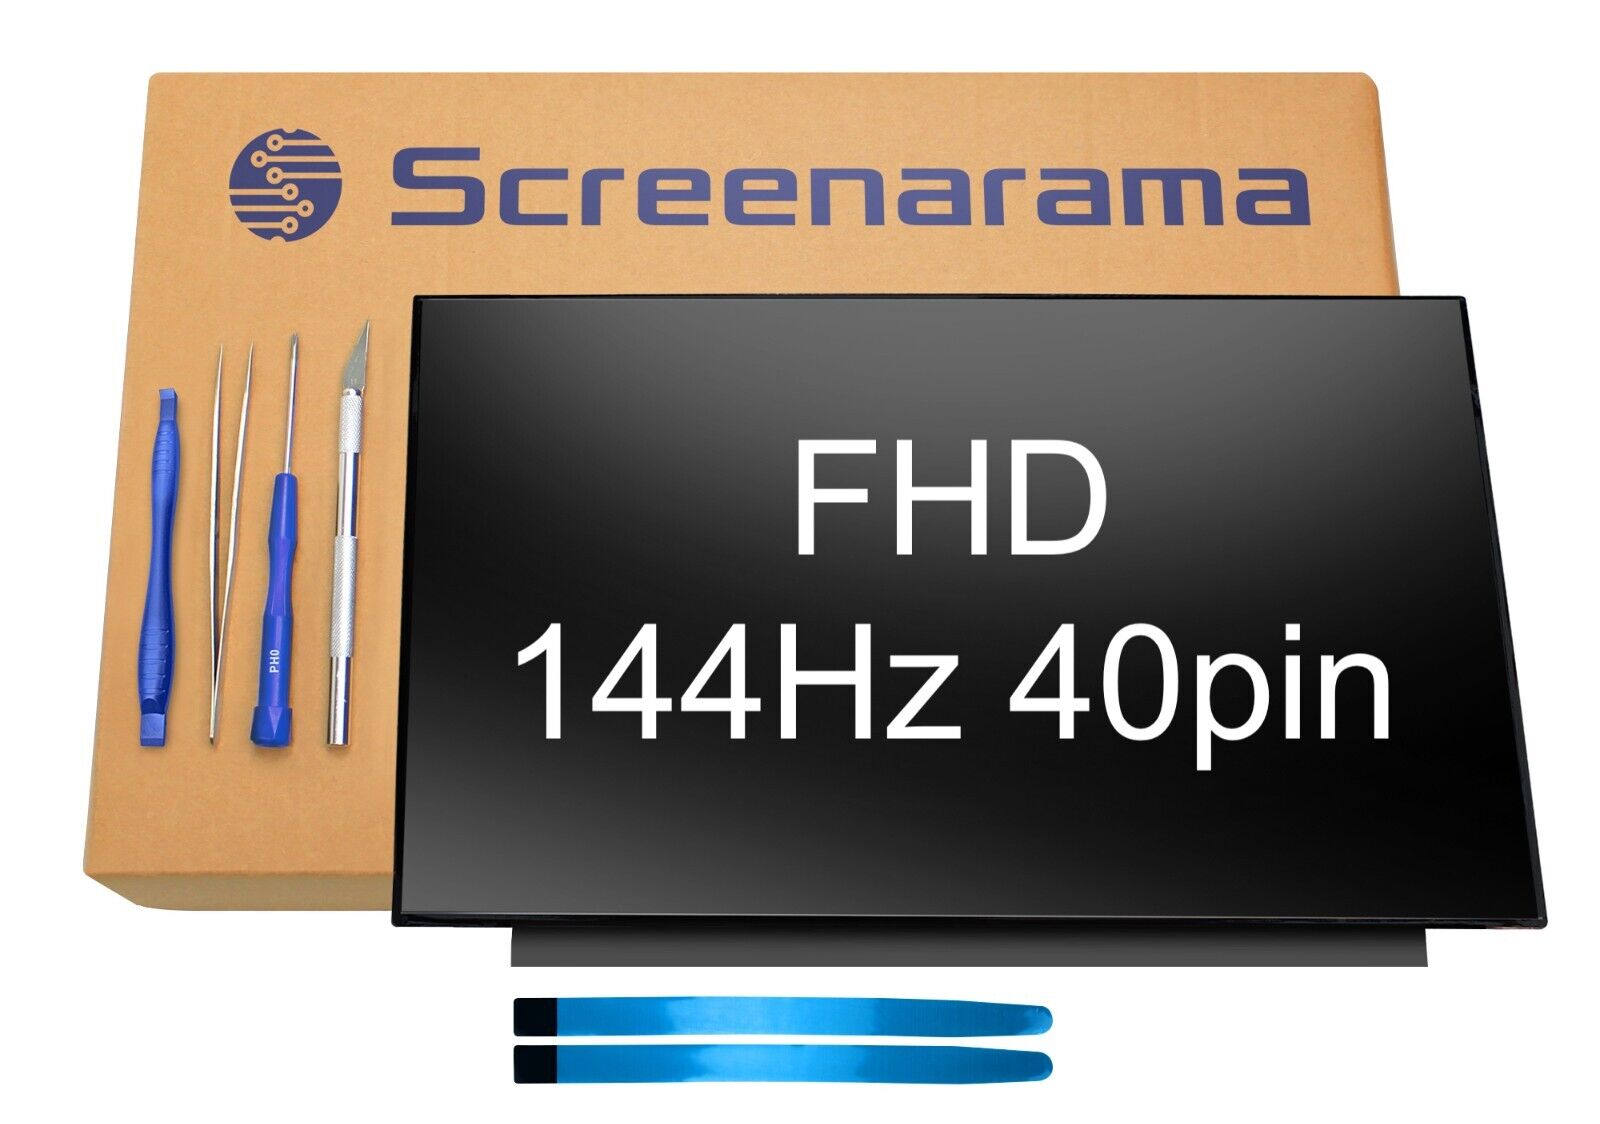 ASUS TUF FX505 FX505D FX505DT-AH51 FHD 144Hz 40pin LCD Screen SCREENARAMA * FAST